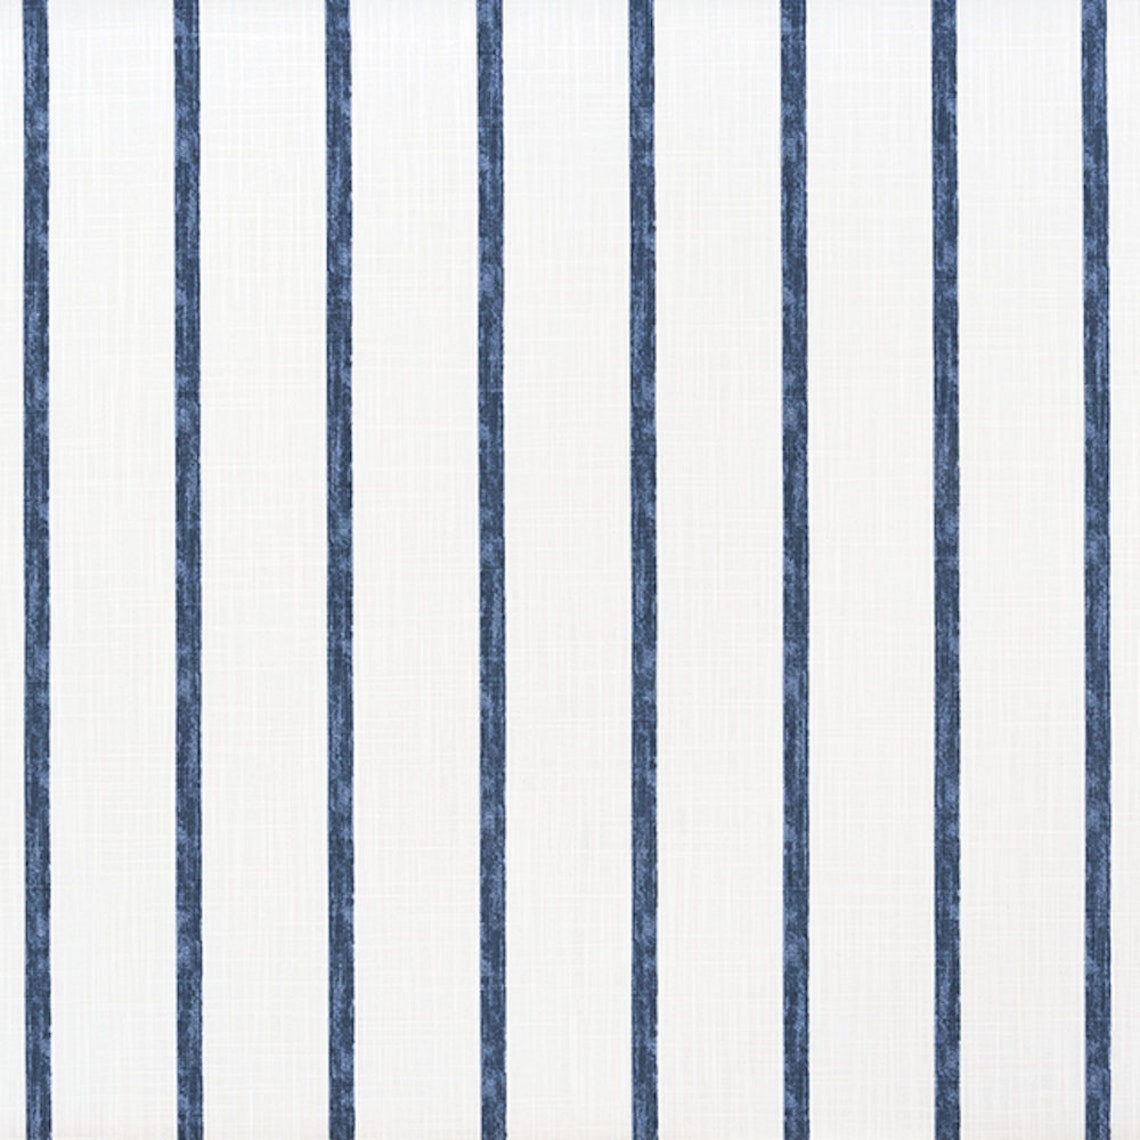 tailored tier cafe curtain panels pair in modern farmhouse miles italian denim blue stripe